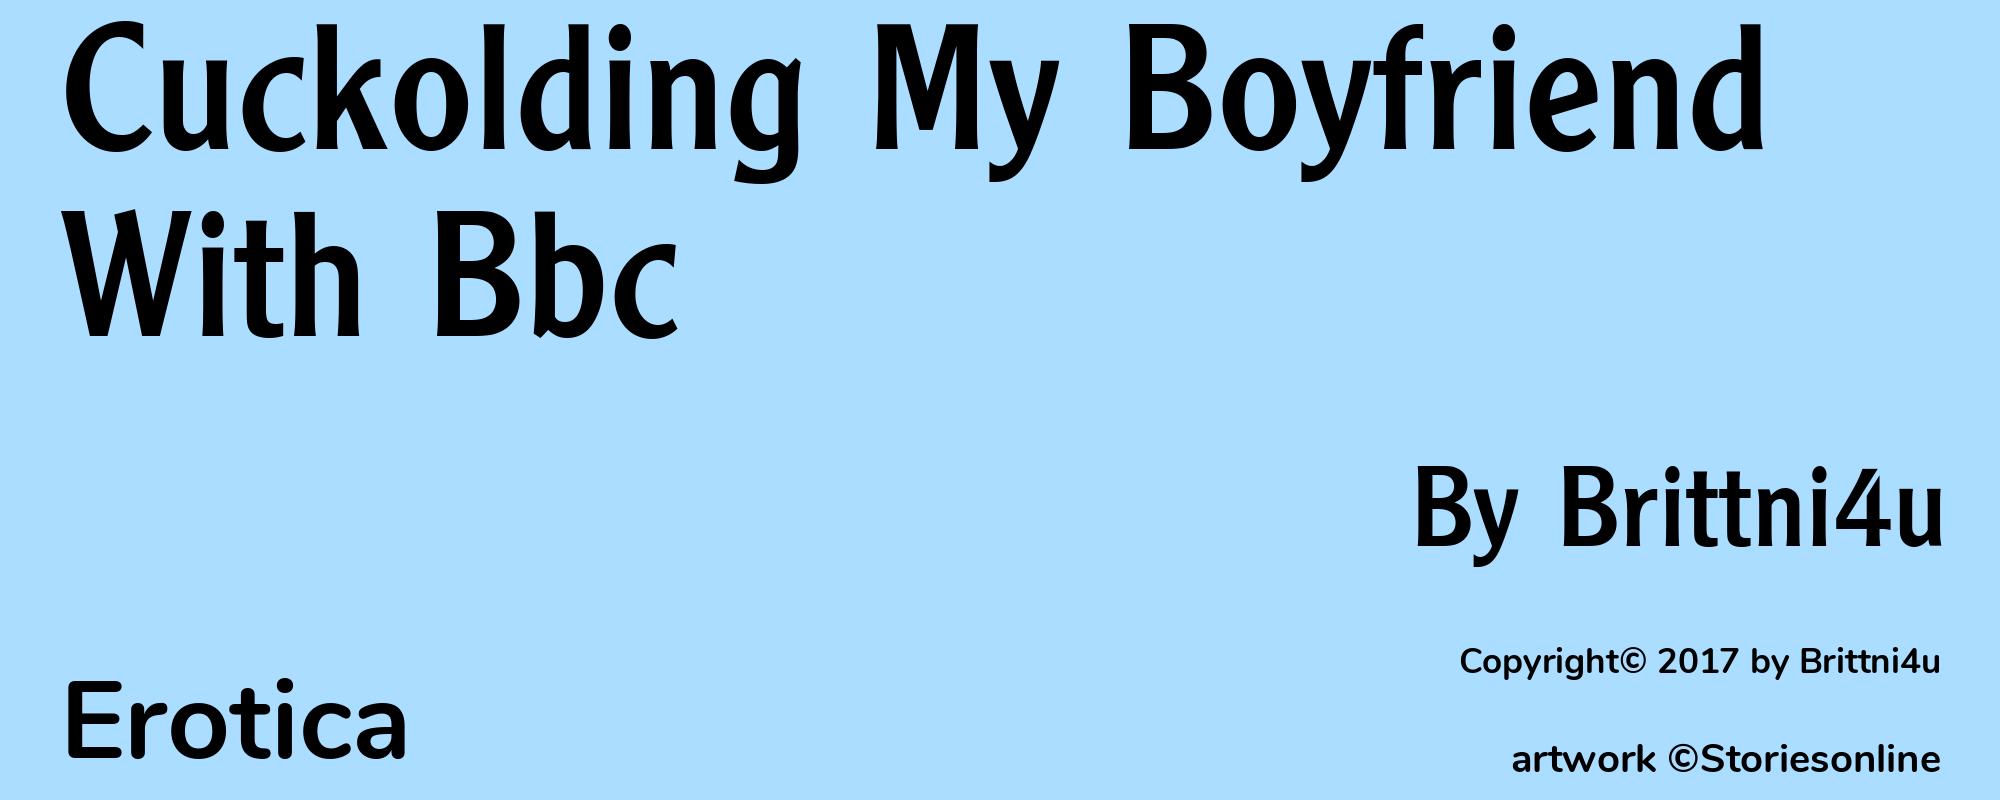 Cuckolding My Boyfriend With Bbc - Cover